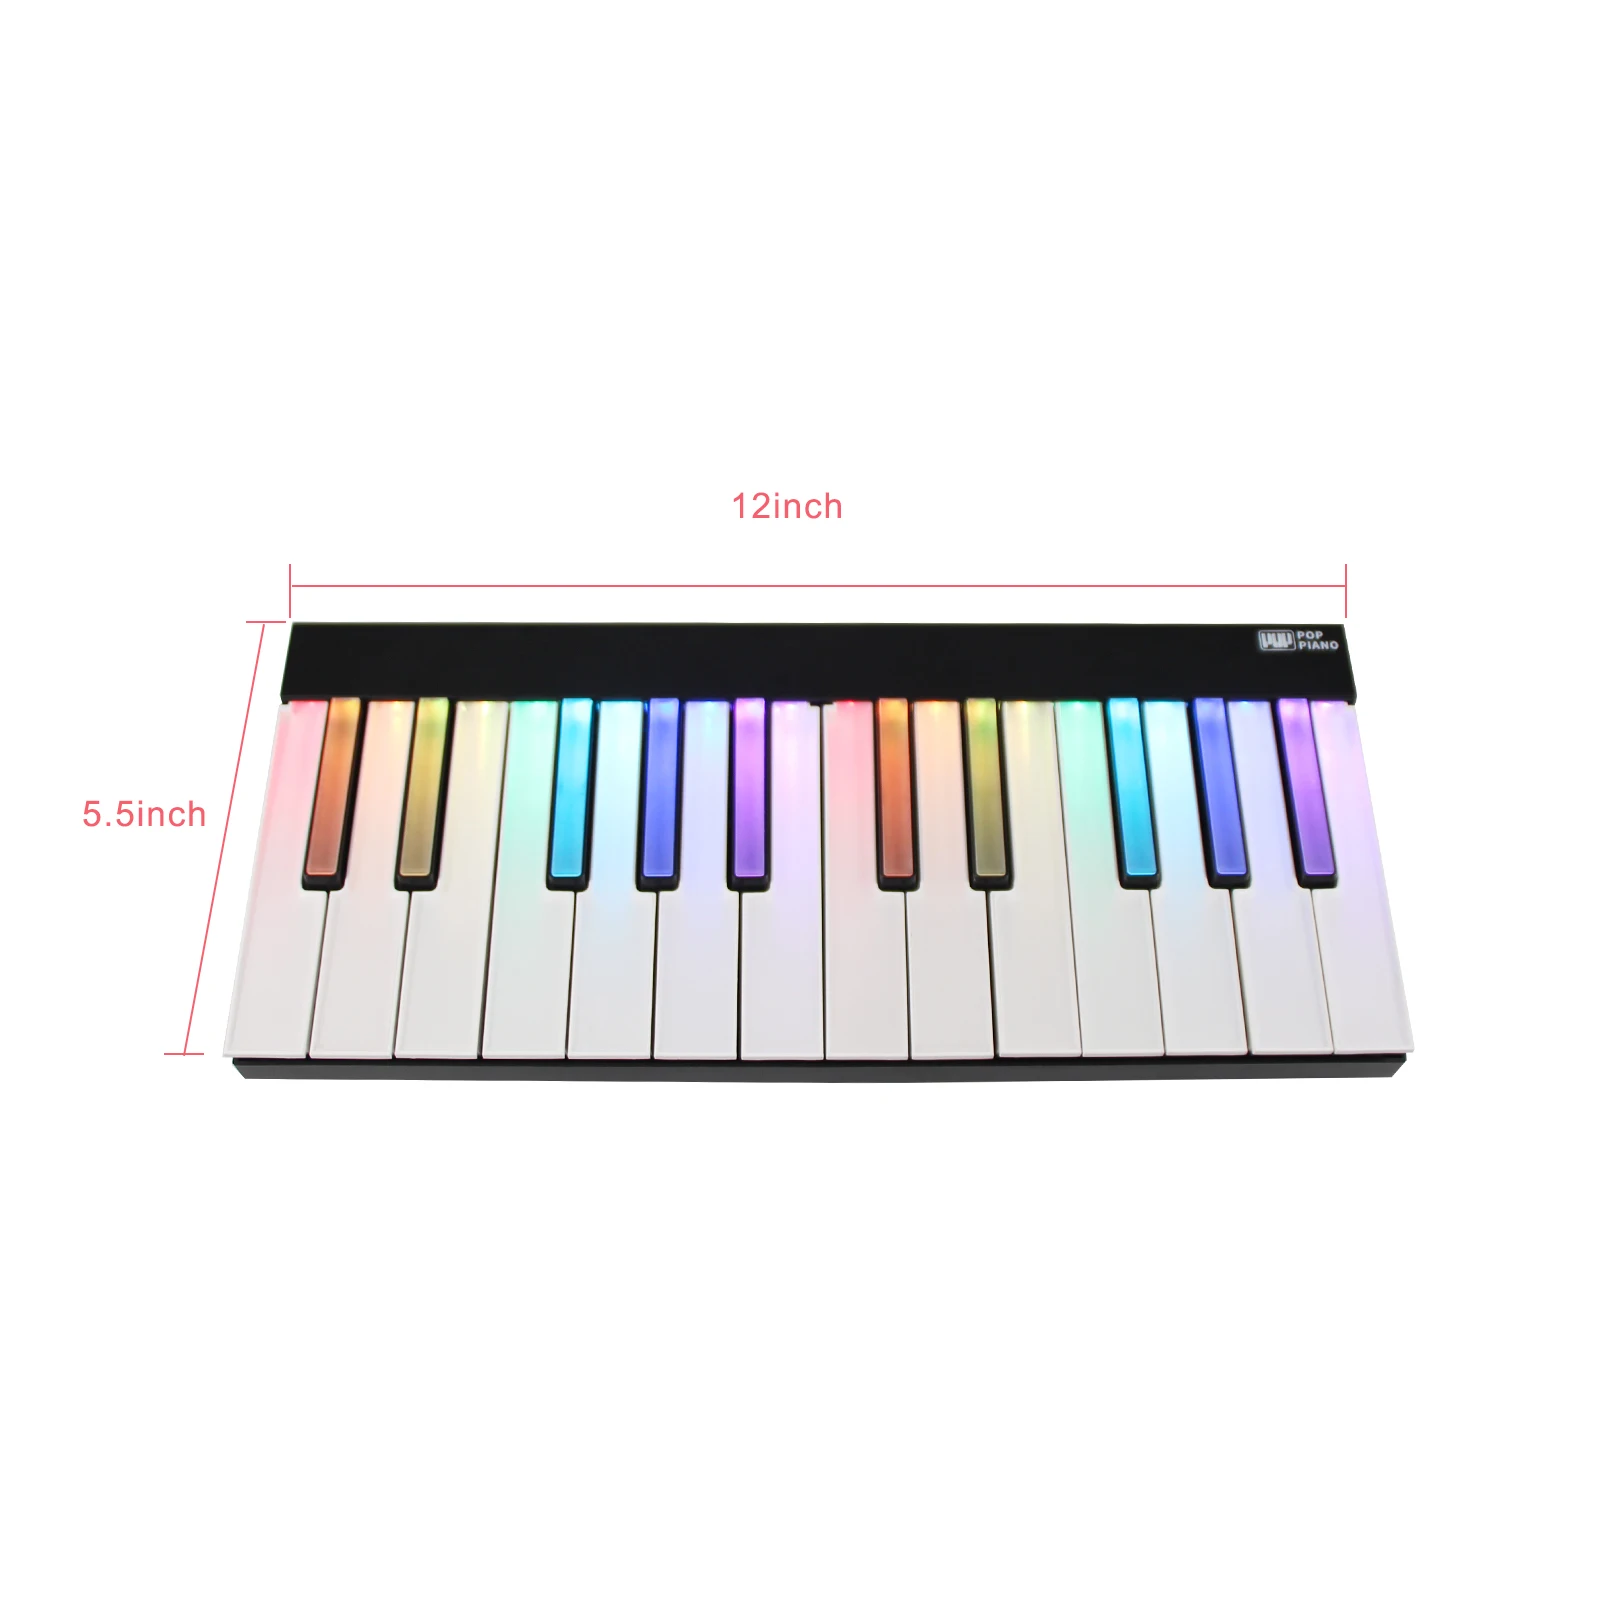 Mini Piano Music Keyboard - Electric Kids Piano Keyboard 24 Key with Light, Digital Pop Piano Keyboard